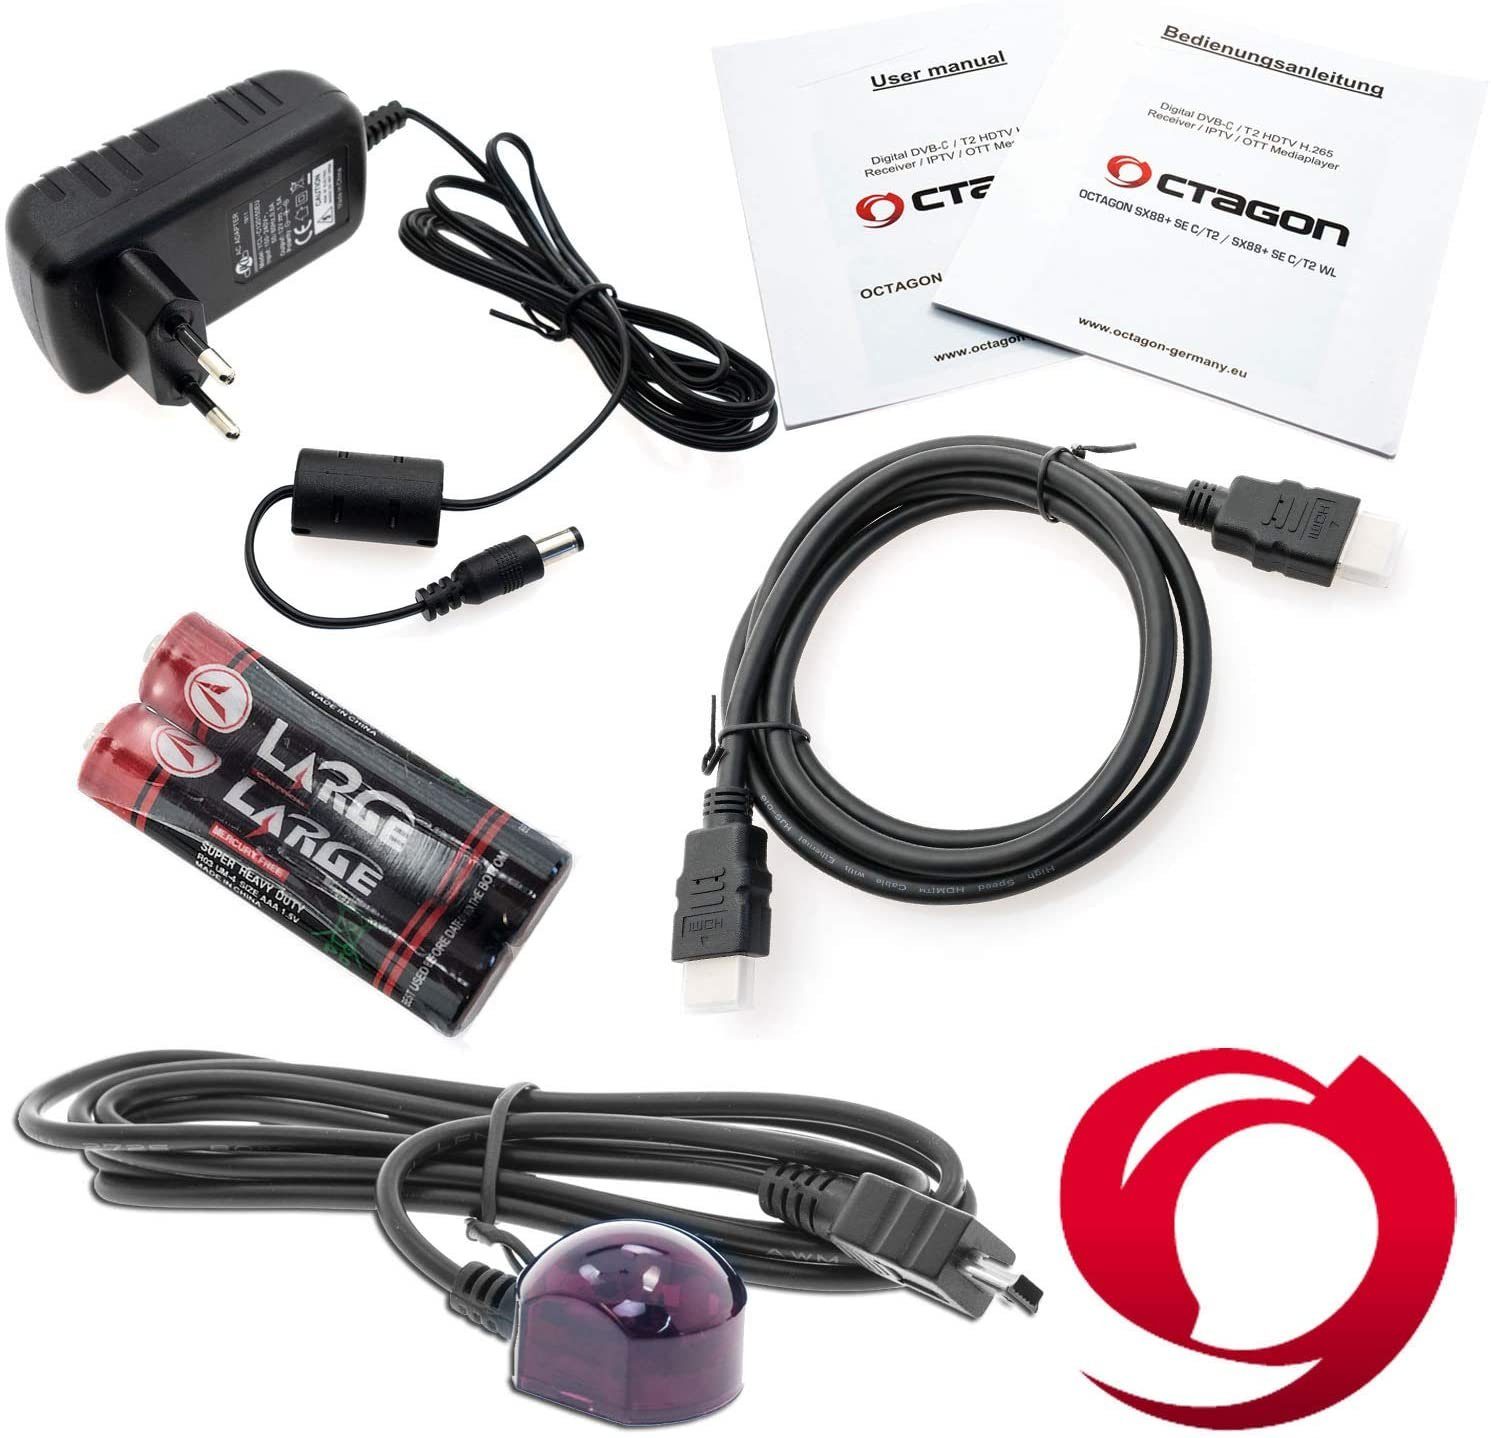 OCTAGON SX88+ SE WL IPTV Hybrid-Receiver Mini + Smart H.265 Kabel-Receiver HD C/T2 Box